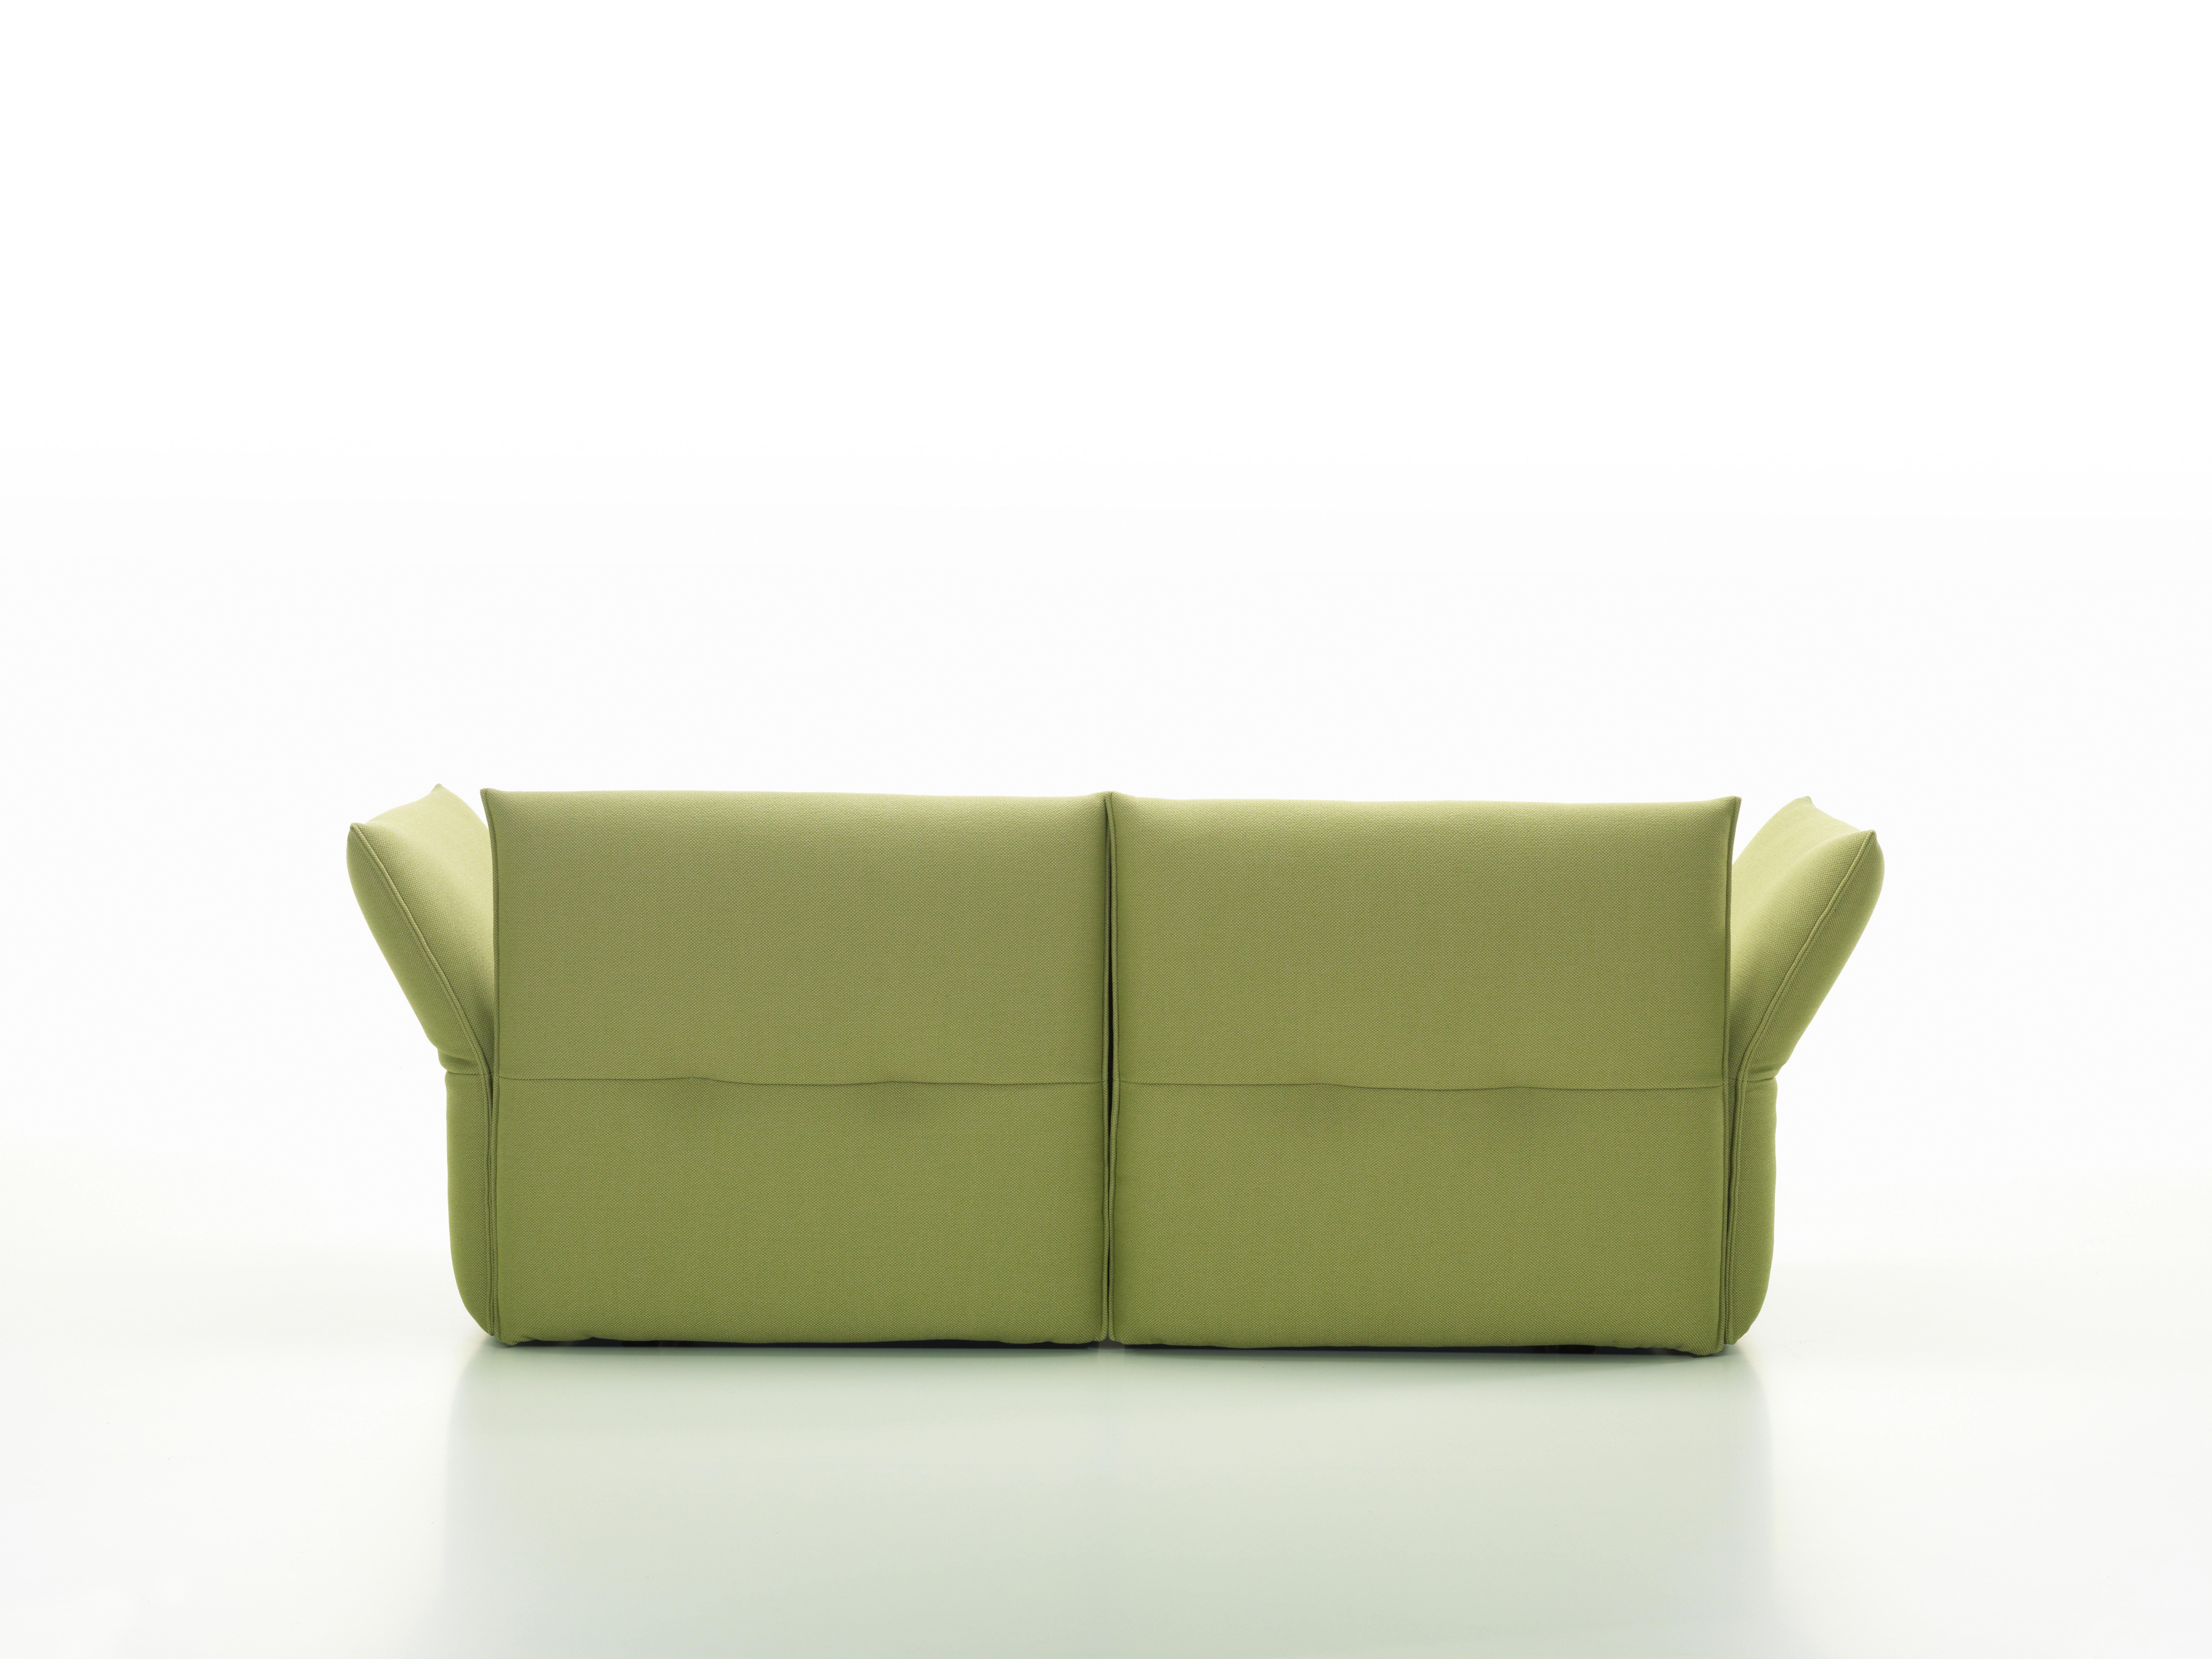 Vitra Mariposa 2-Seat Sofa in Sand & Avocado Credo by Edward Barber & Jay For Sale 3